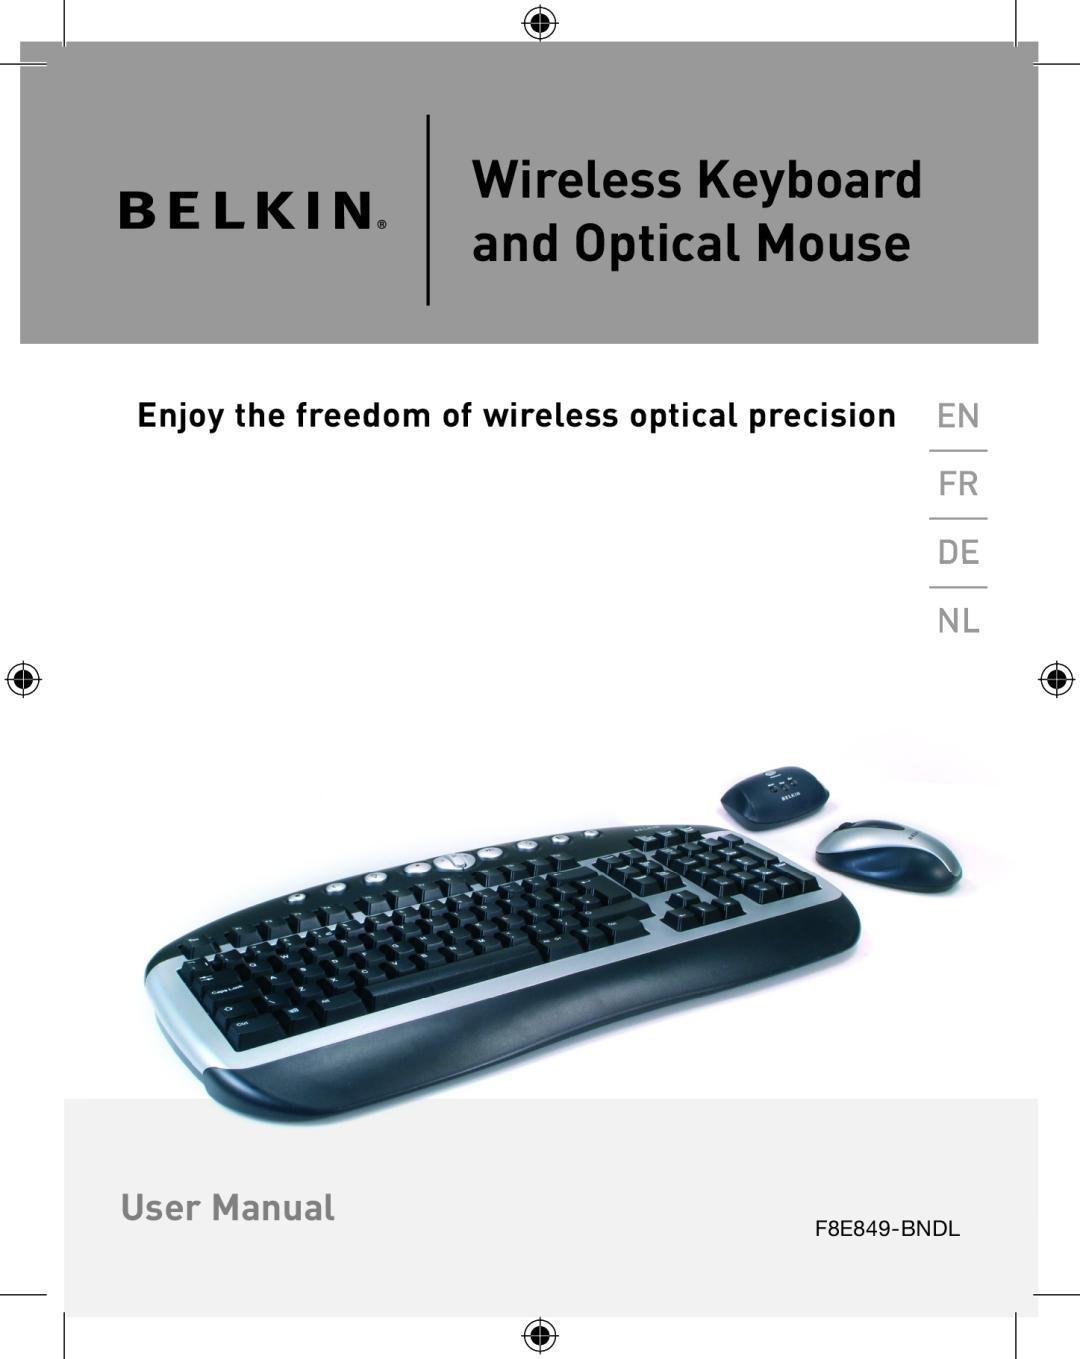 Belkin F8E849-BNDL, P74775UK user manual Wireless Keyboard and Optical Mouse, User Manual 